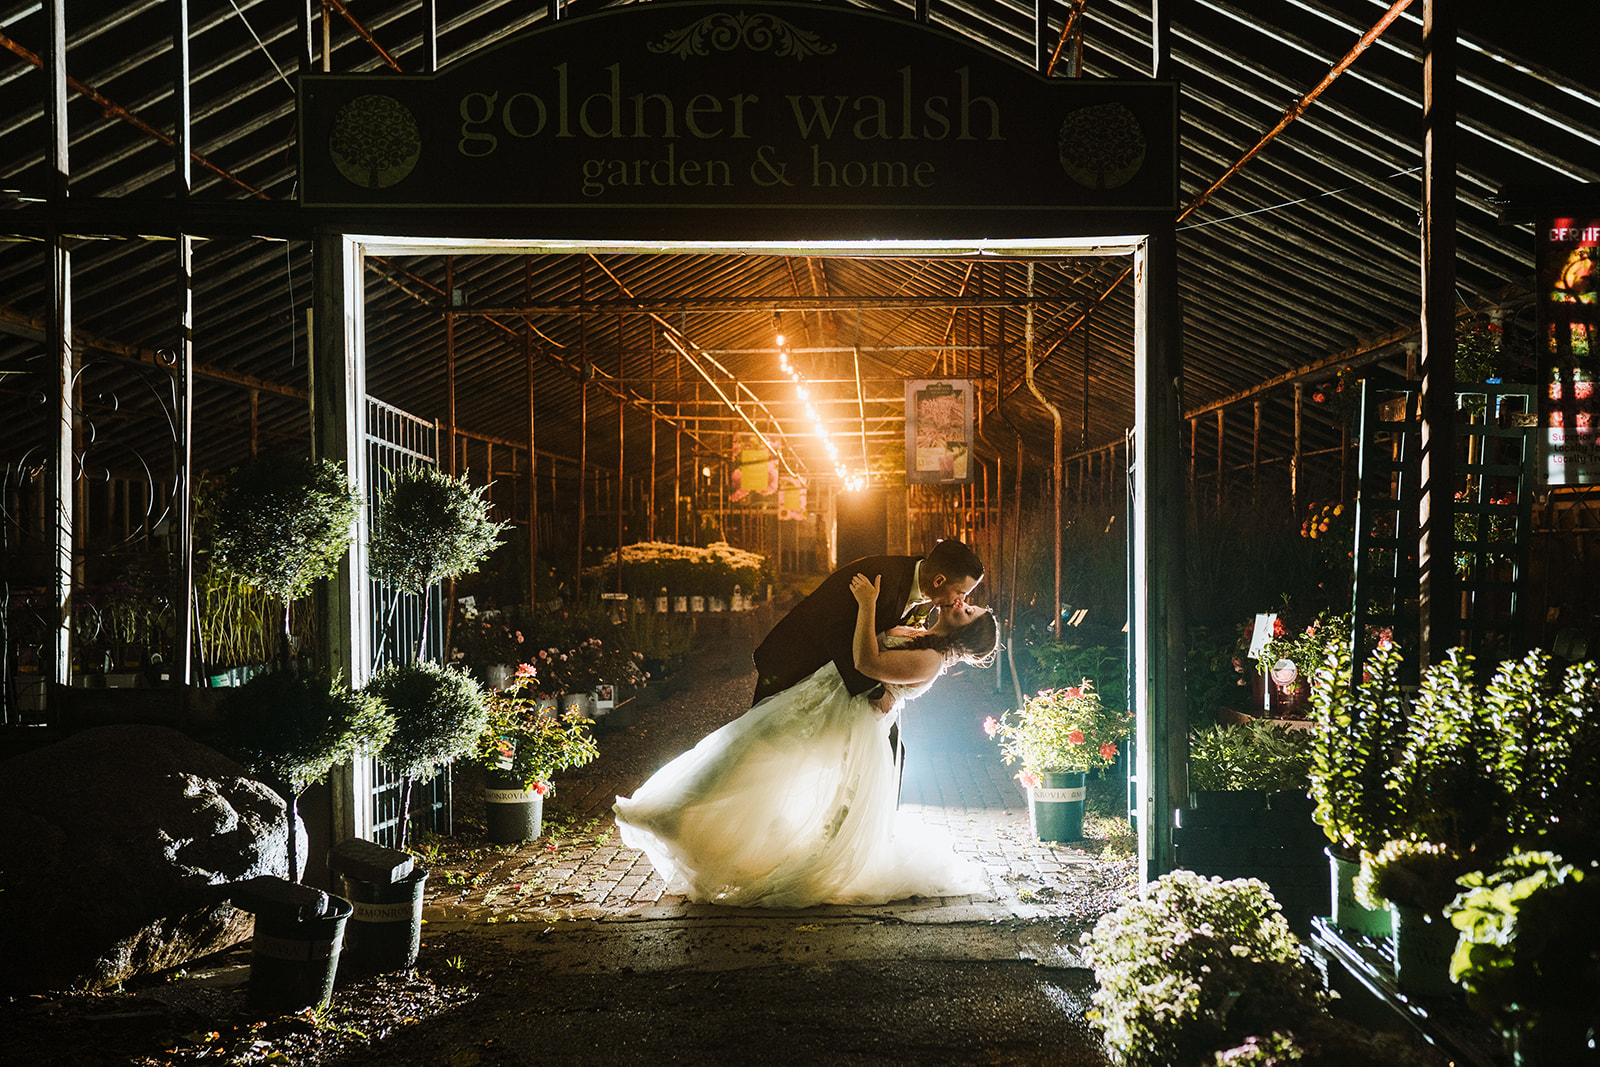 Goldner Walsh Wedding | Michael & Angela